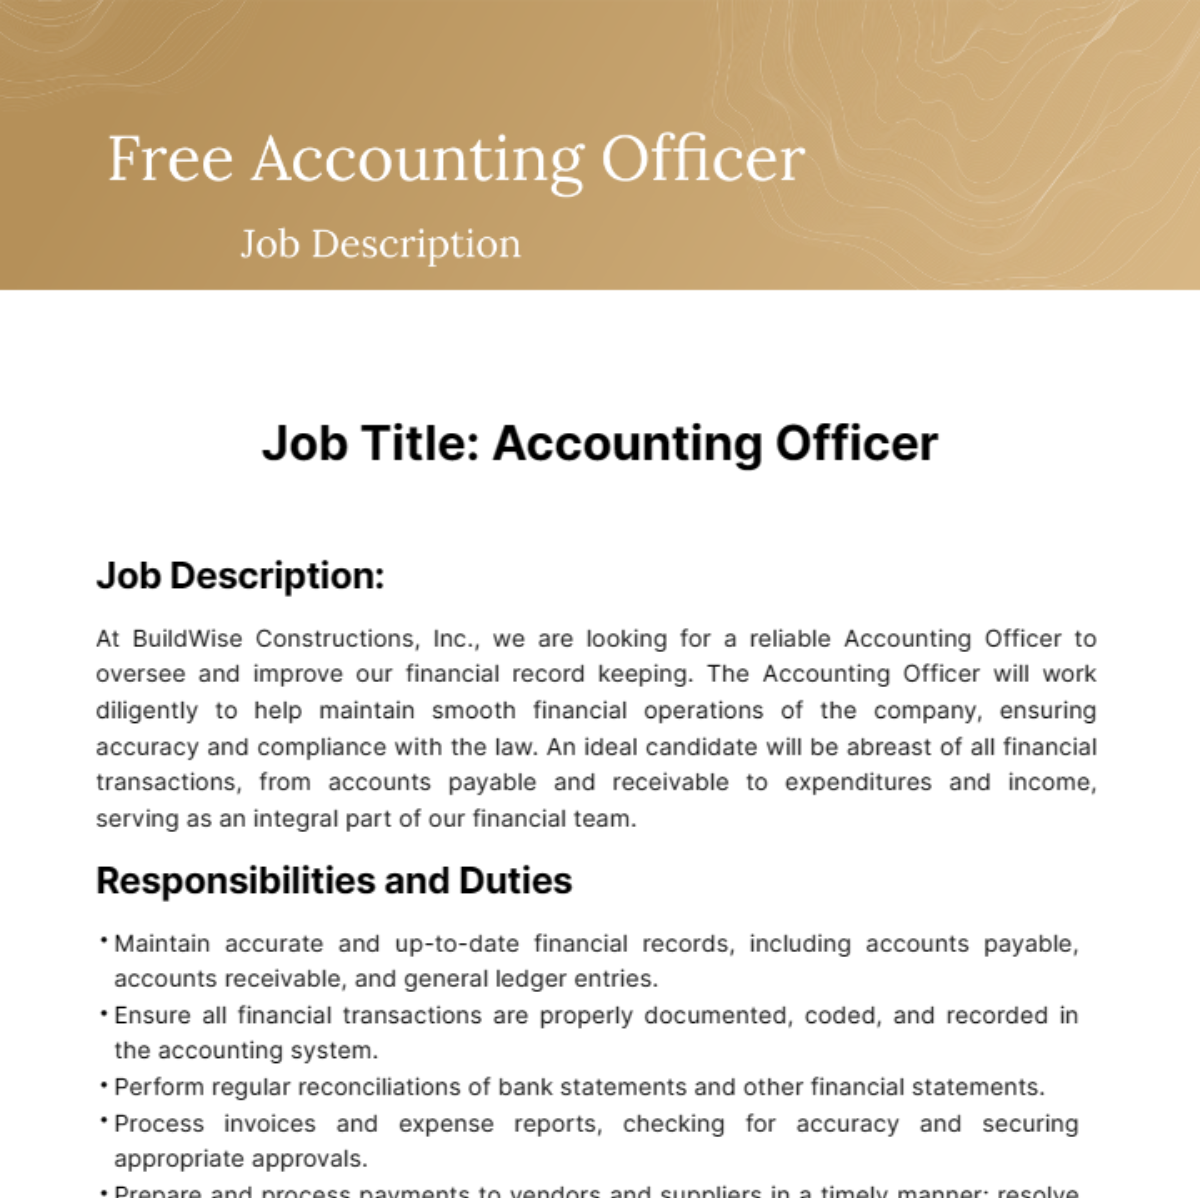 Accounting Officer Job Description Template